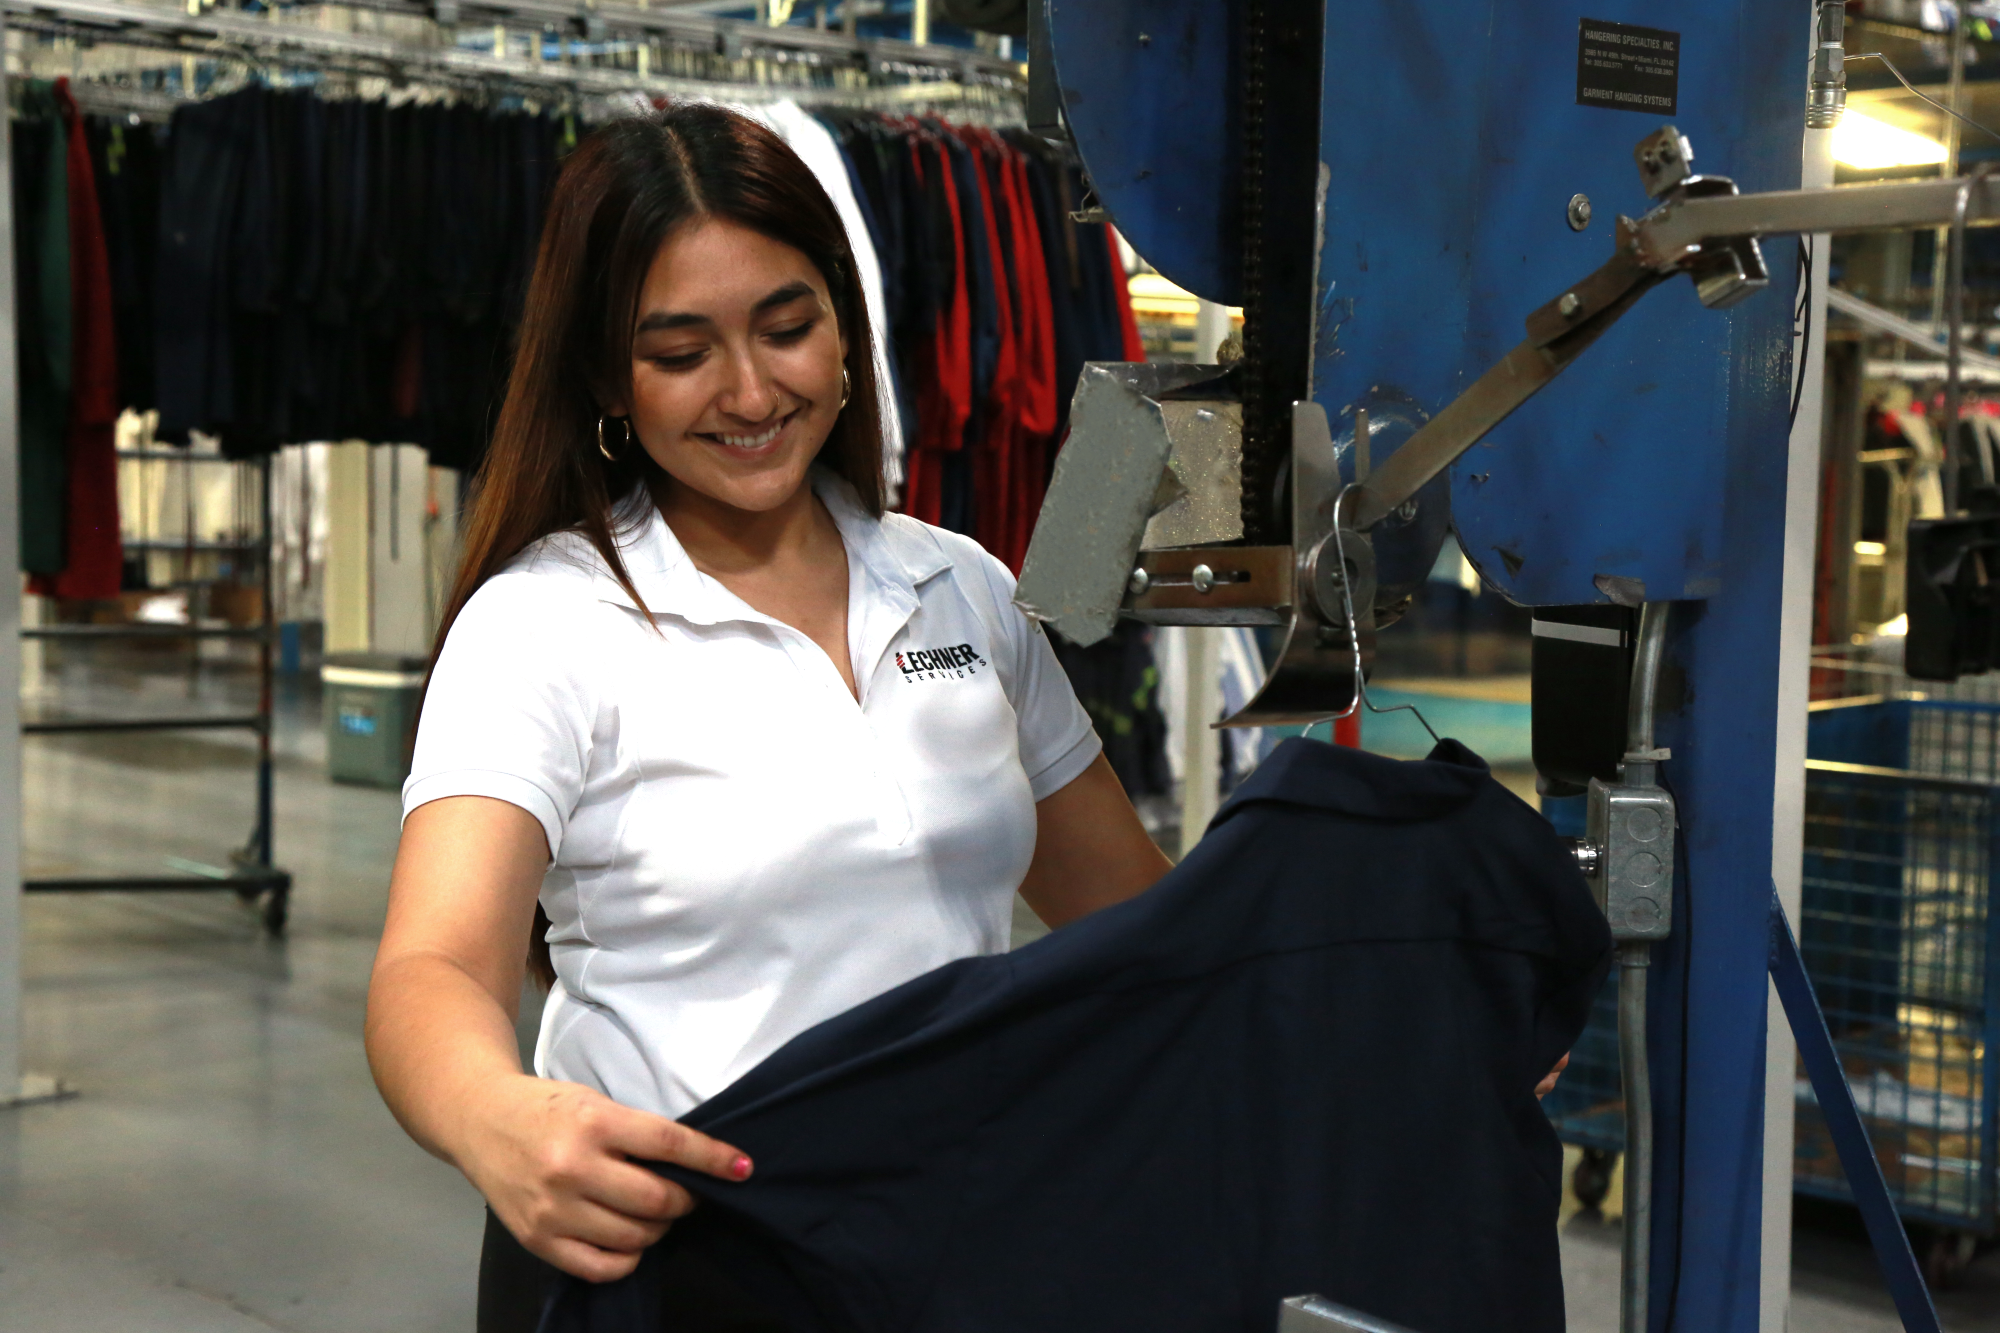 Lechner employee inspecting a uniform shirt for damages